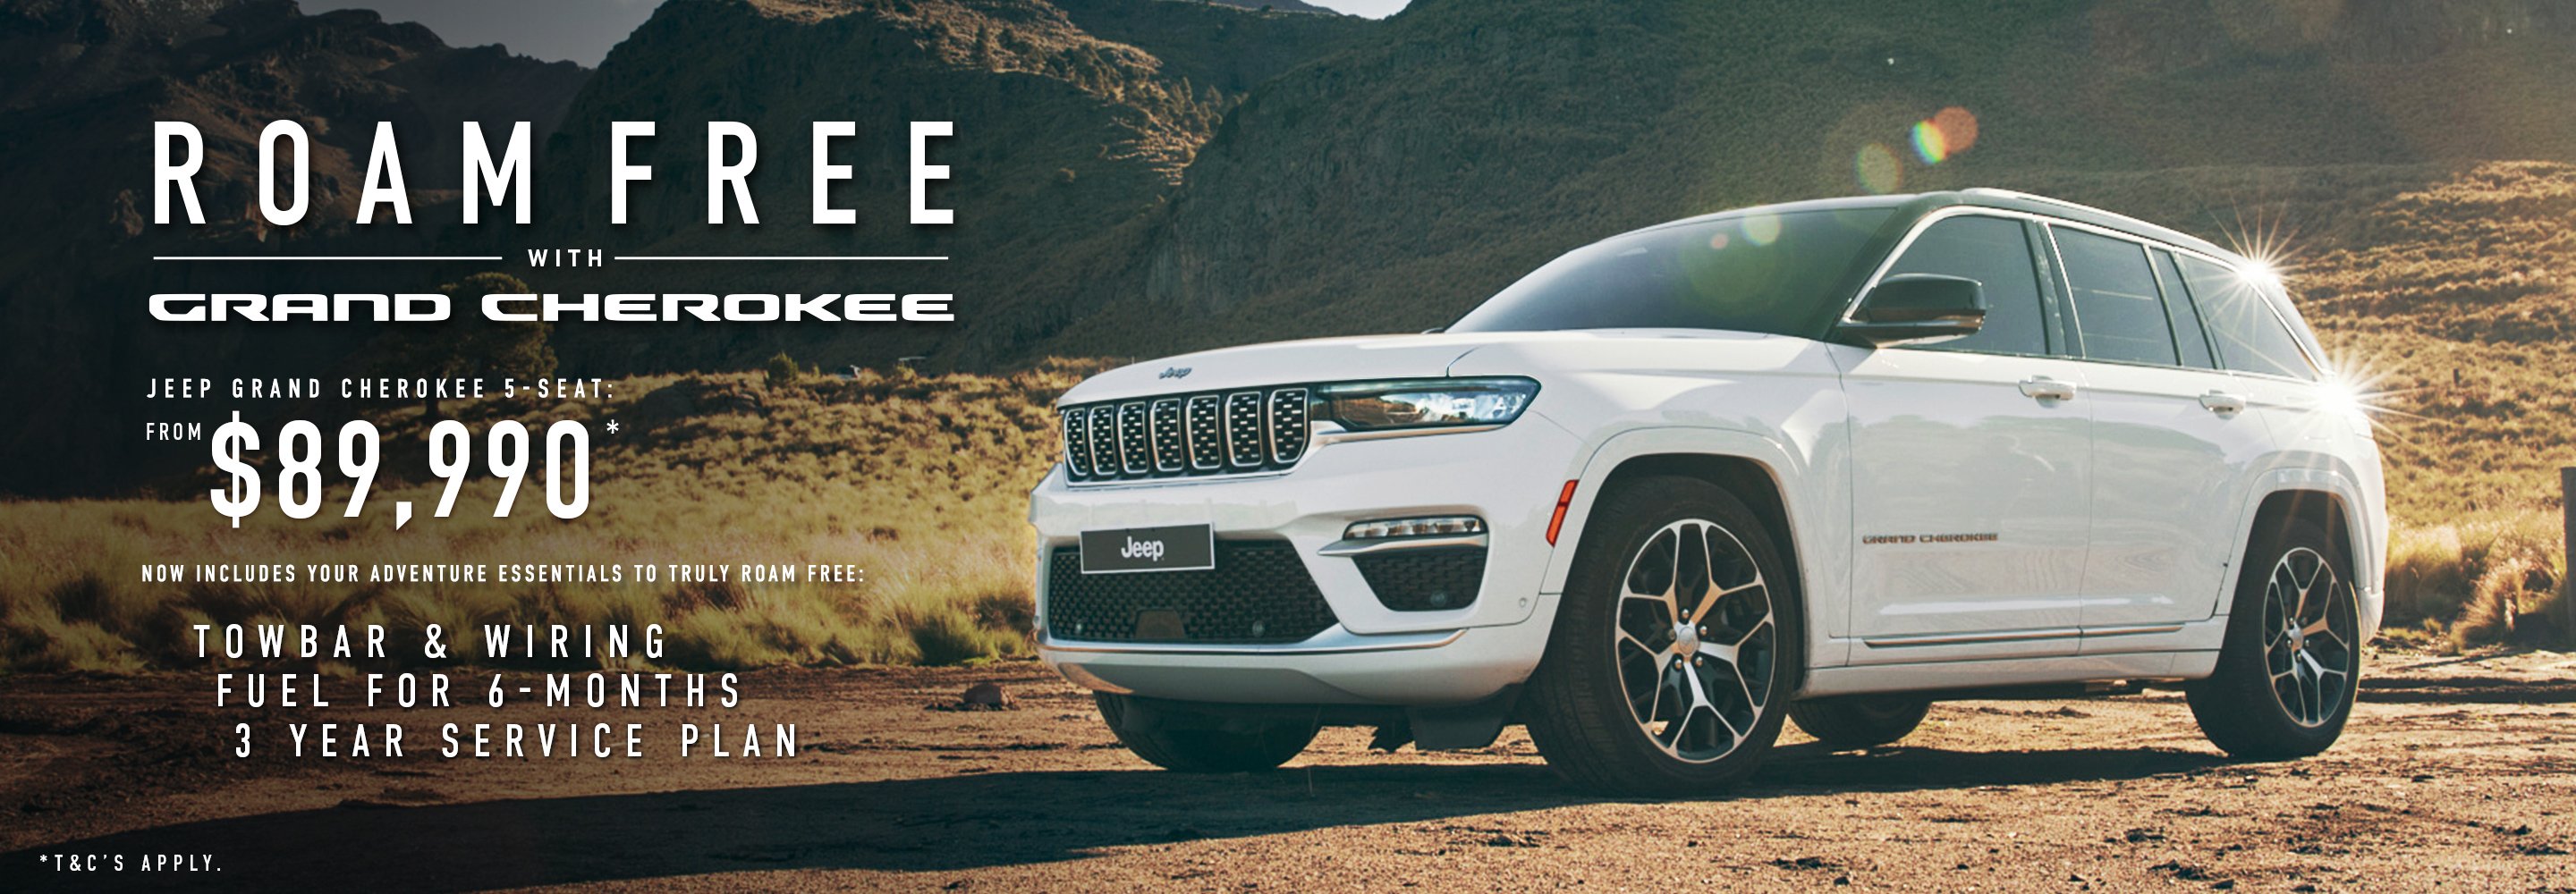 Grand Cherokee 5-Seat 'Roam Free' Campaign